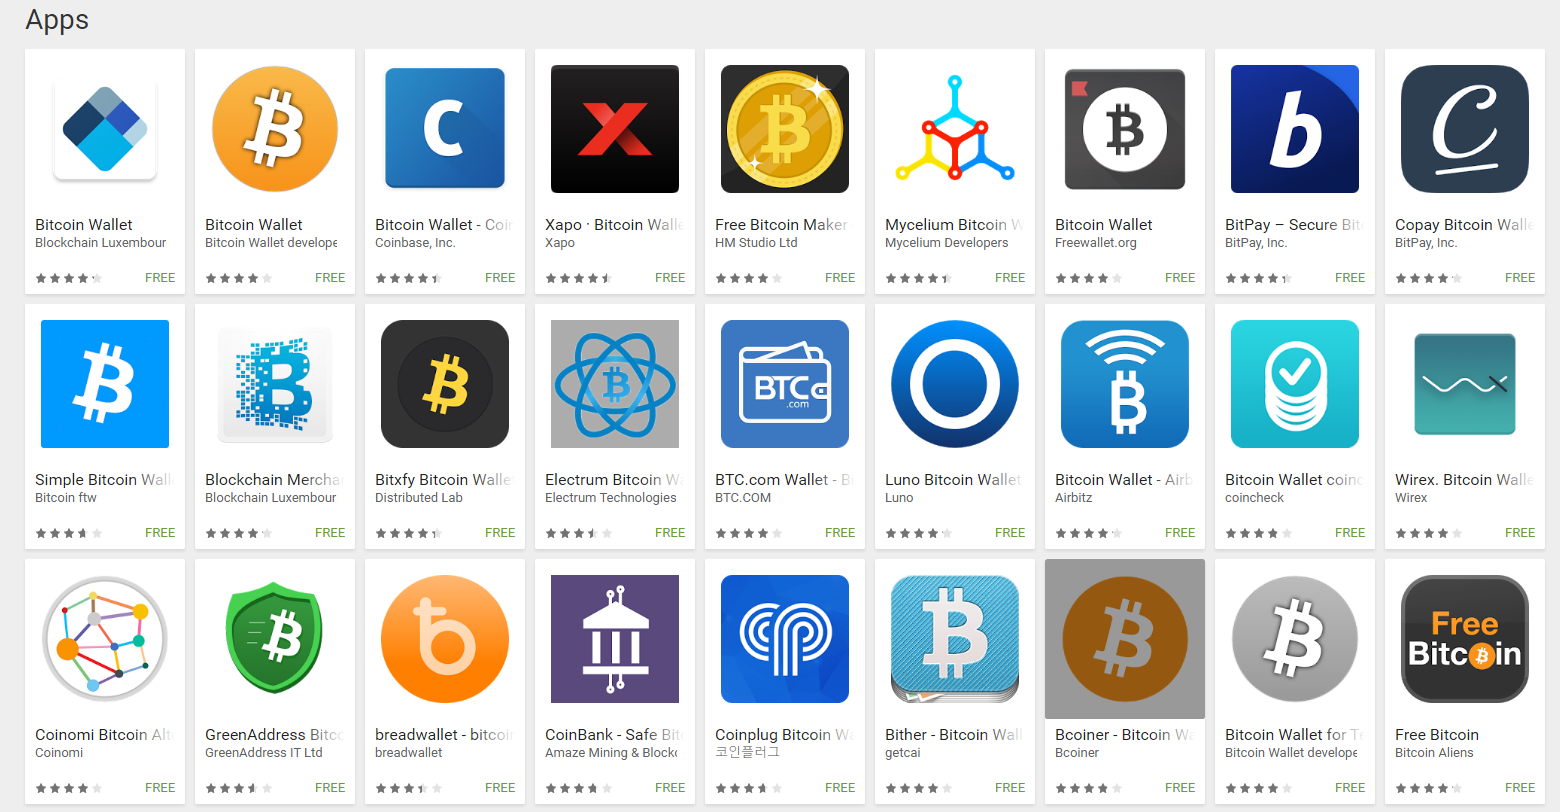 Bitcoin wallet apps